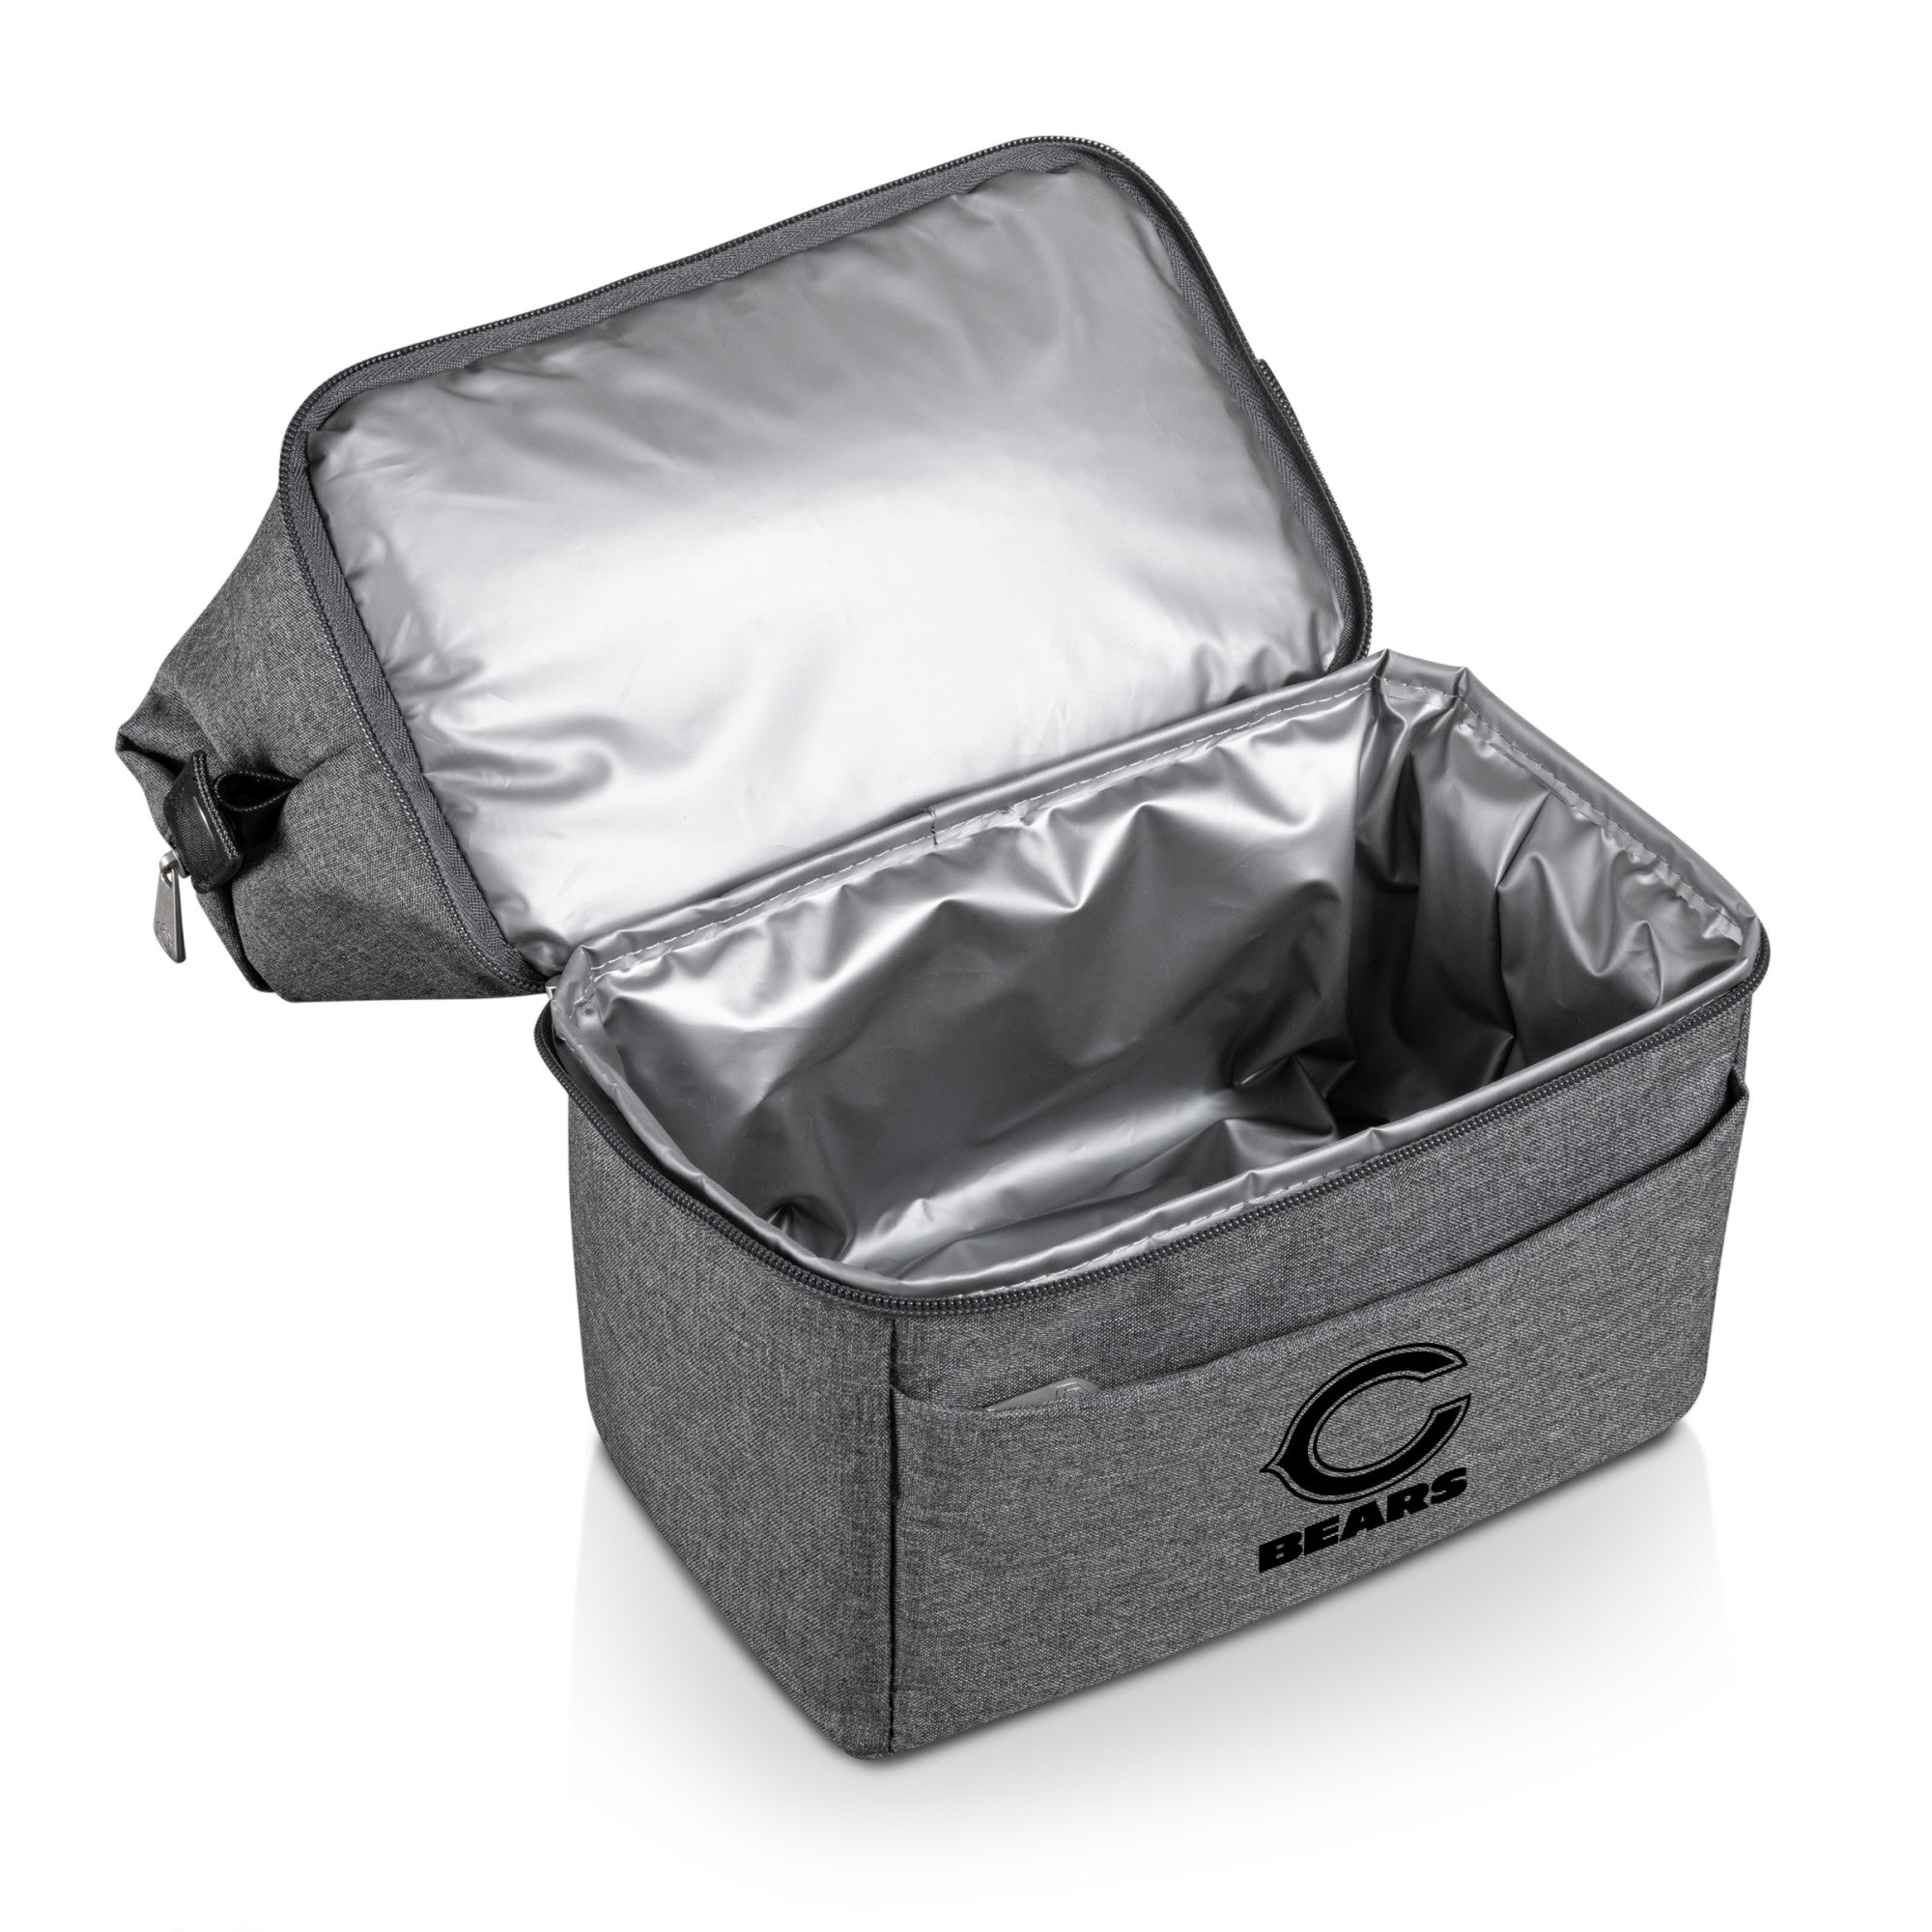 Chicago Bears - Urban Lunch Bag Cooler